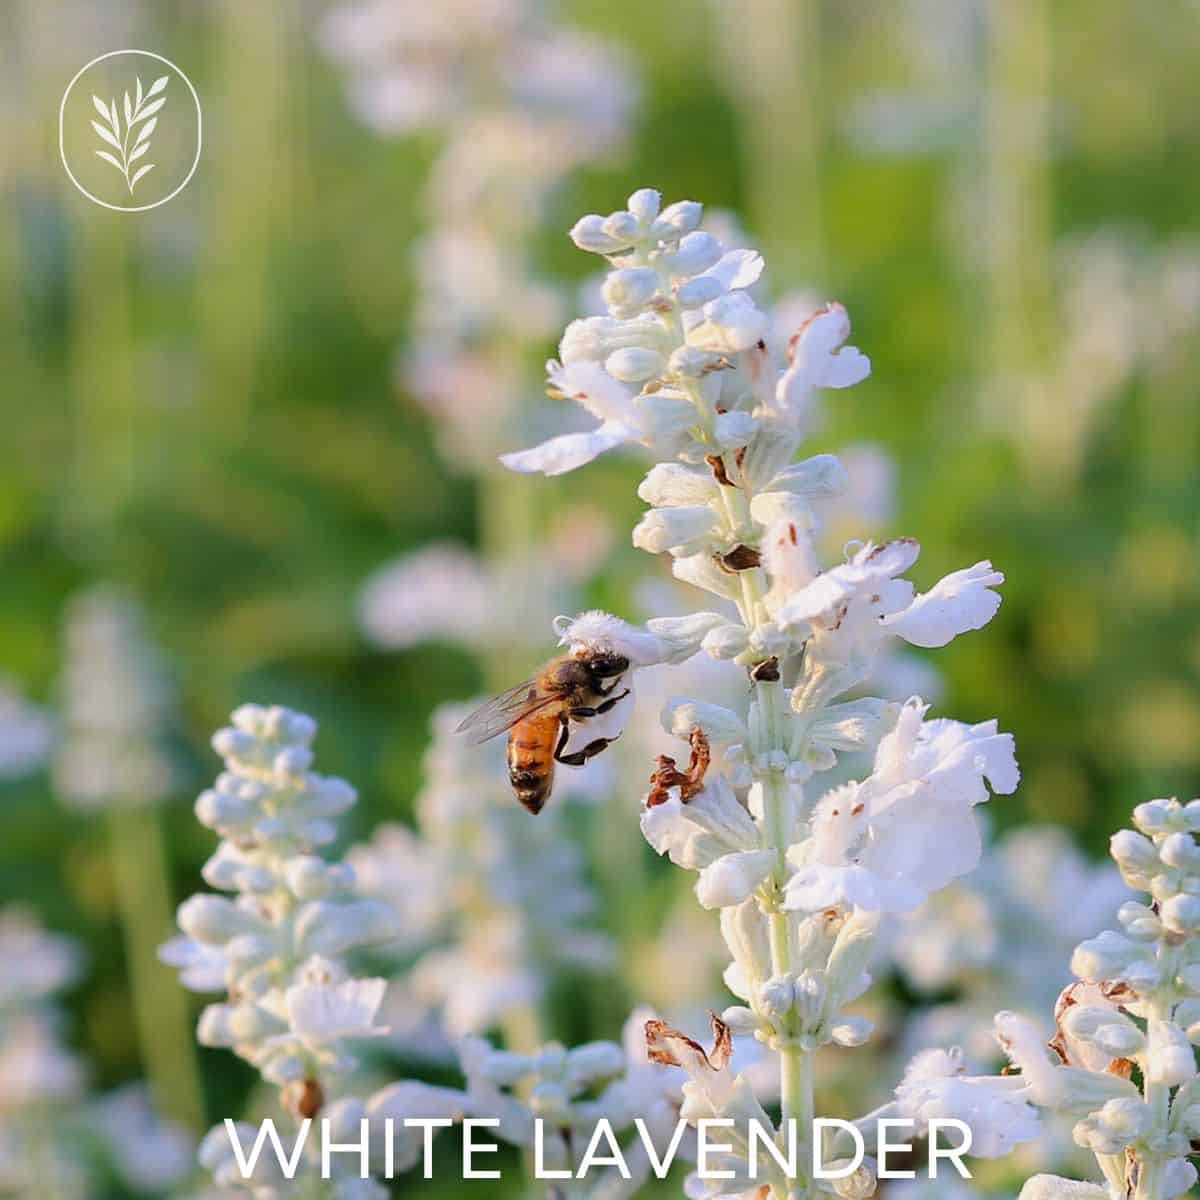 White lavender via @home4theharvest